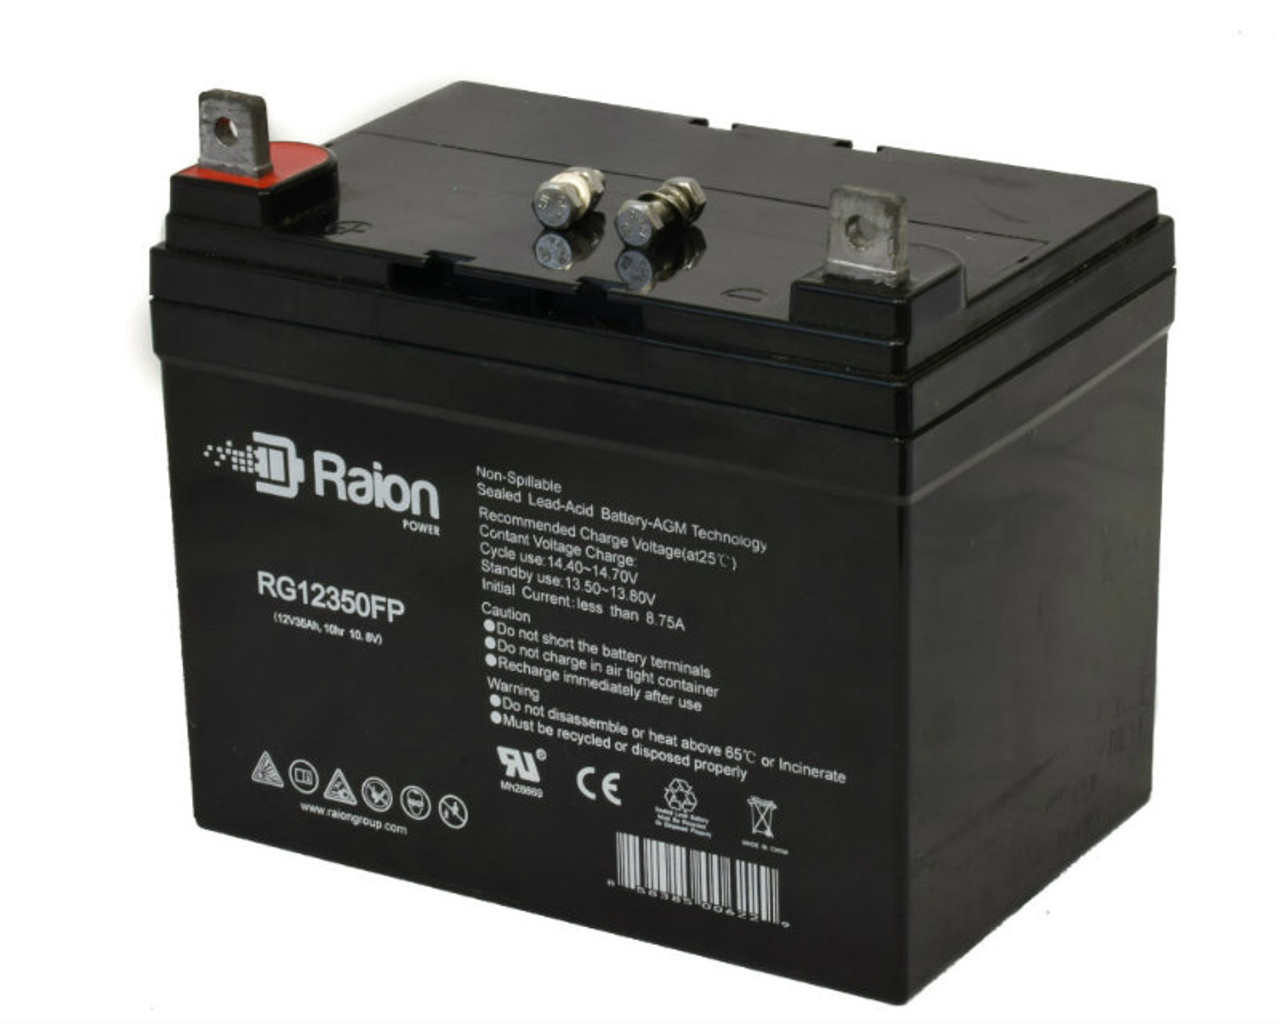 Raion Power Replacement 12V 35Ah RG12350FP Battery for Bunton BZT61